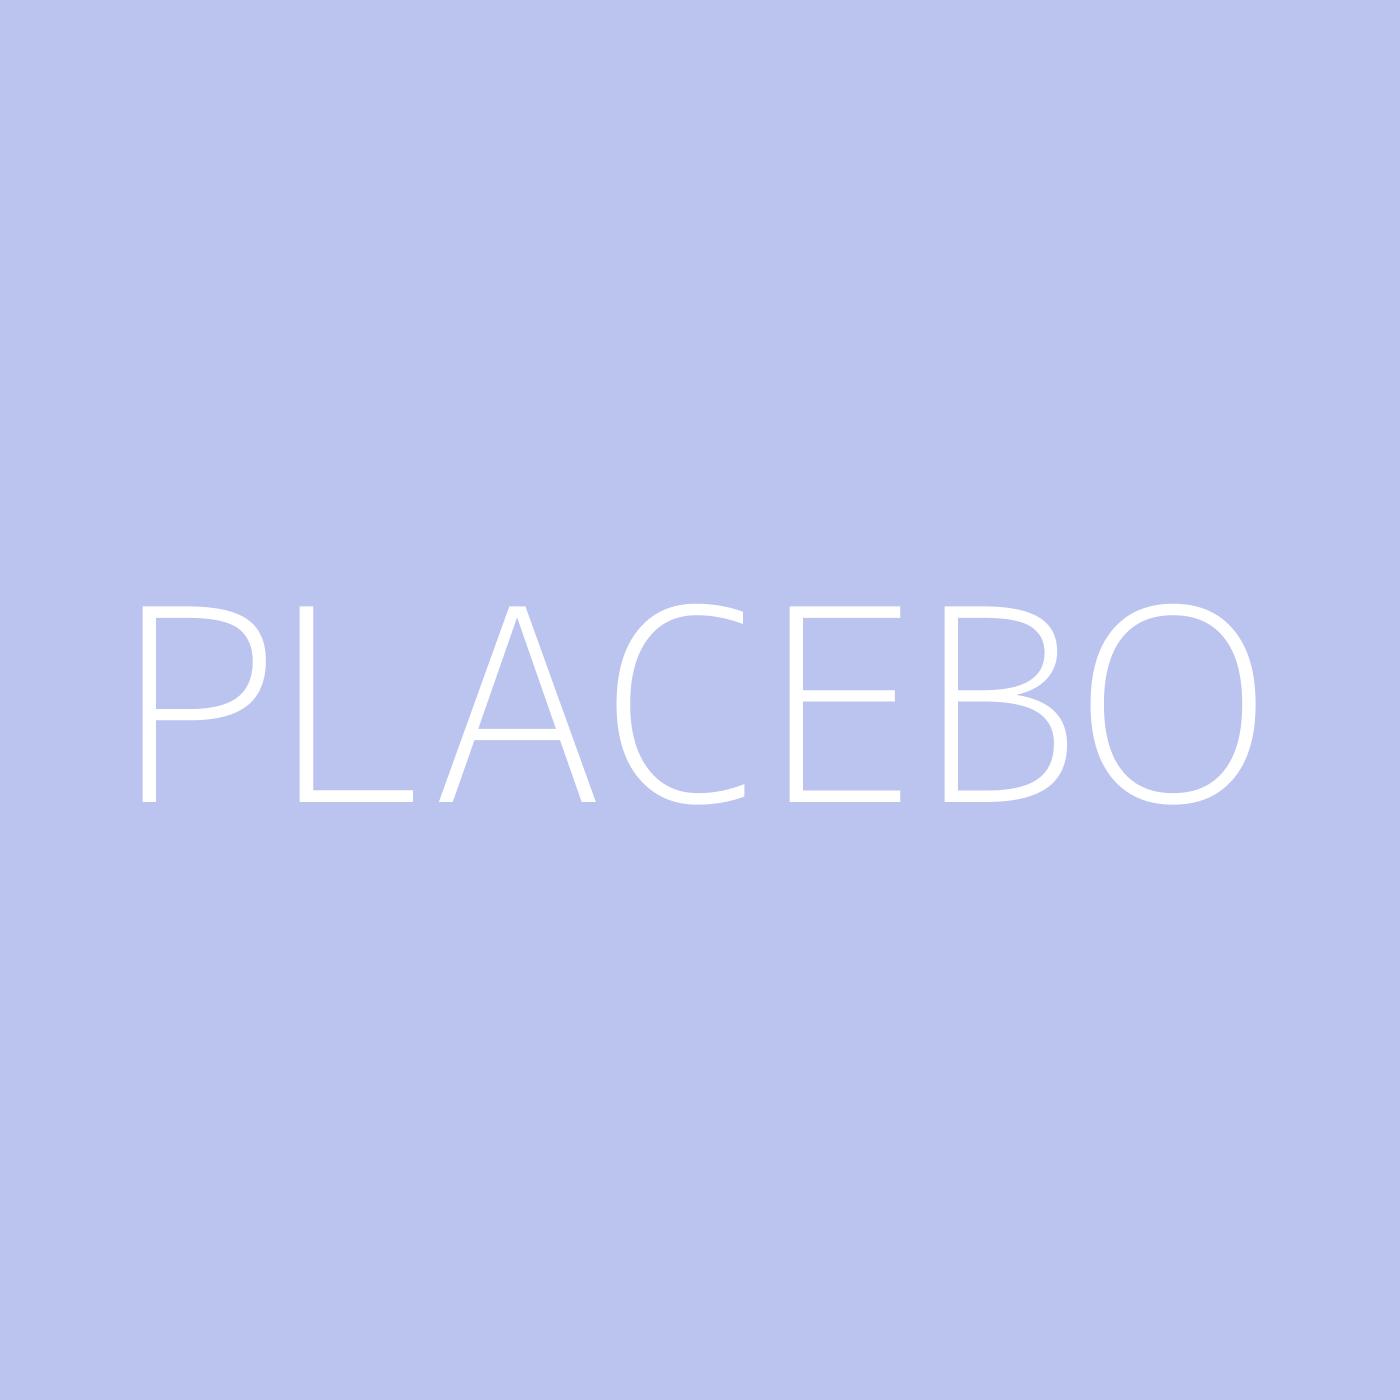 Placebo Playlist Artwork